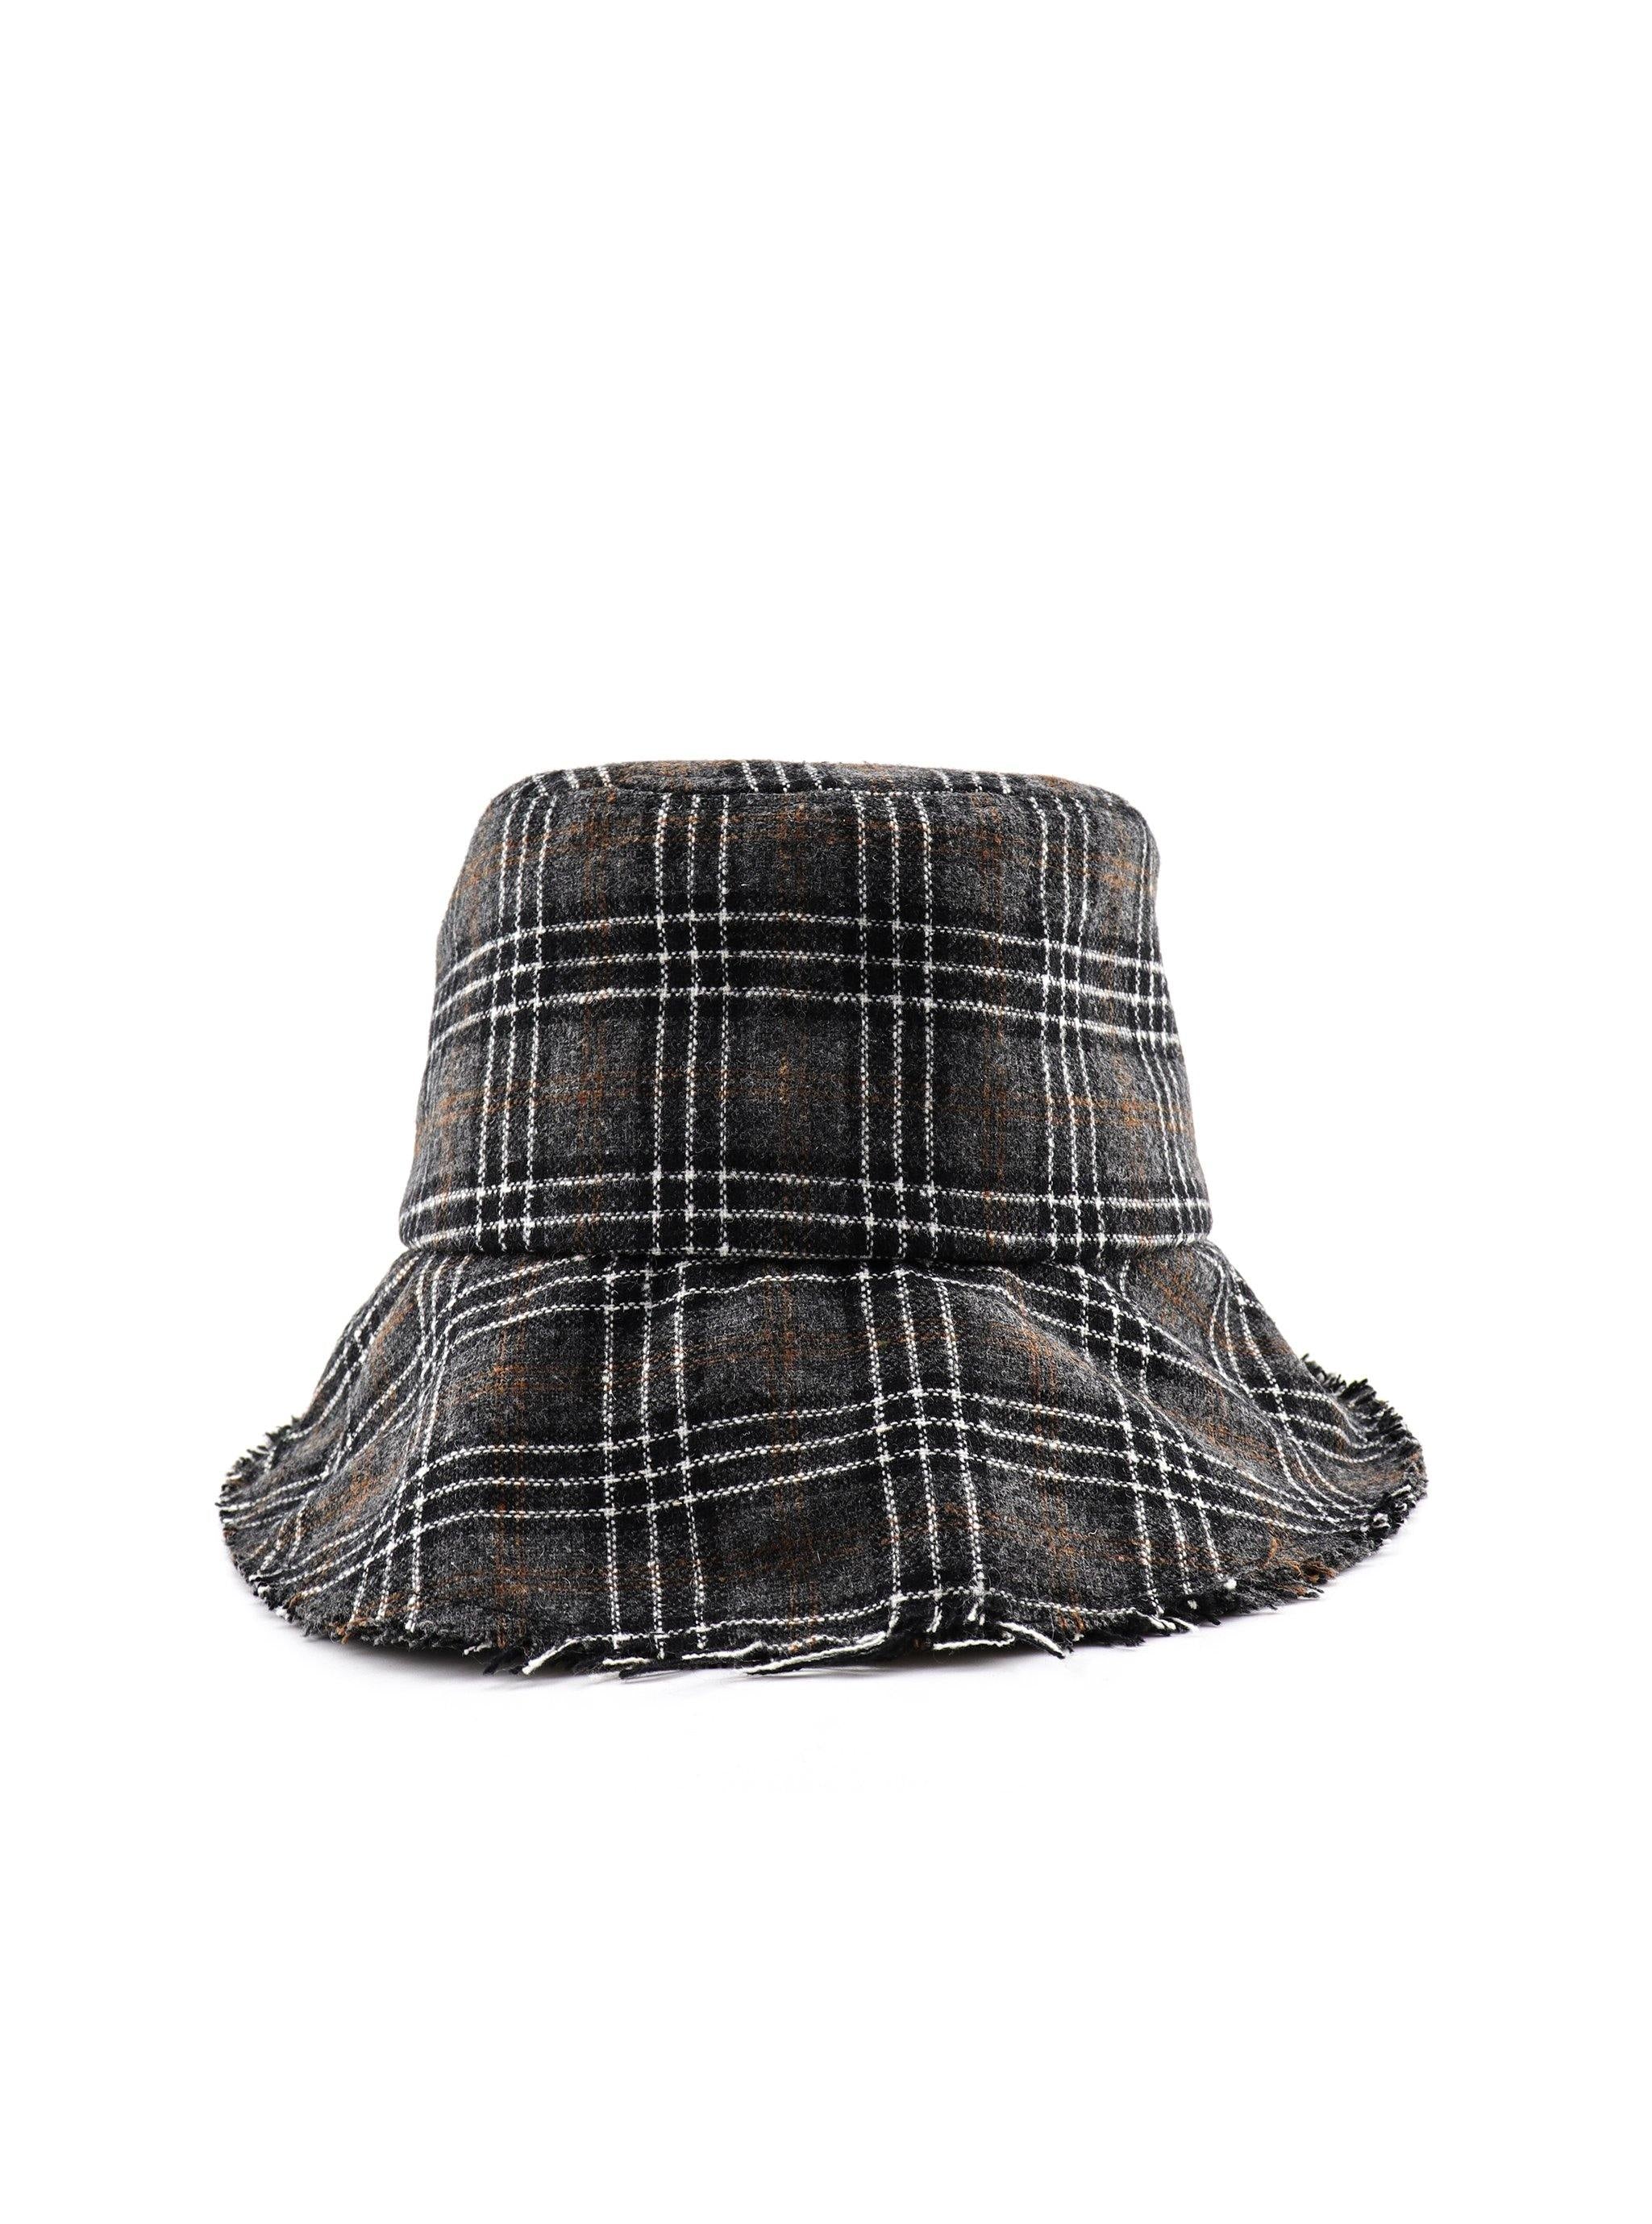 HAZEL BUCKET HAT - Simplique Mode